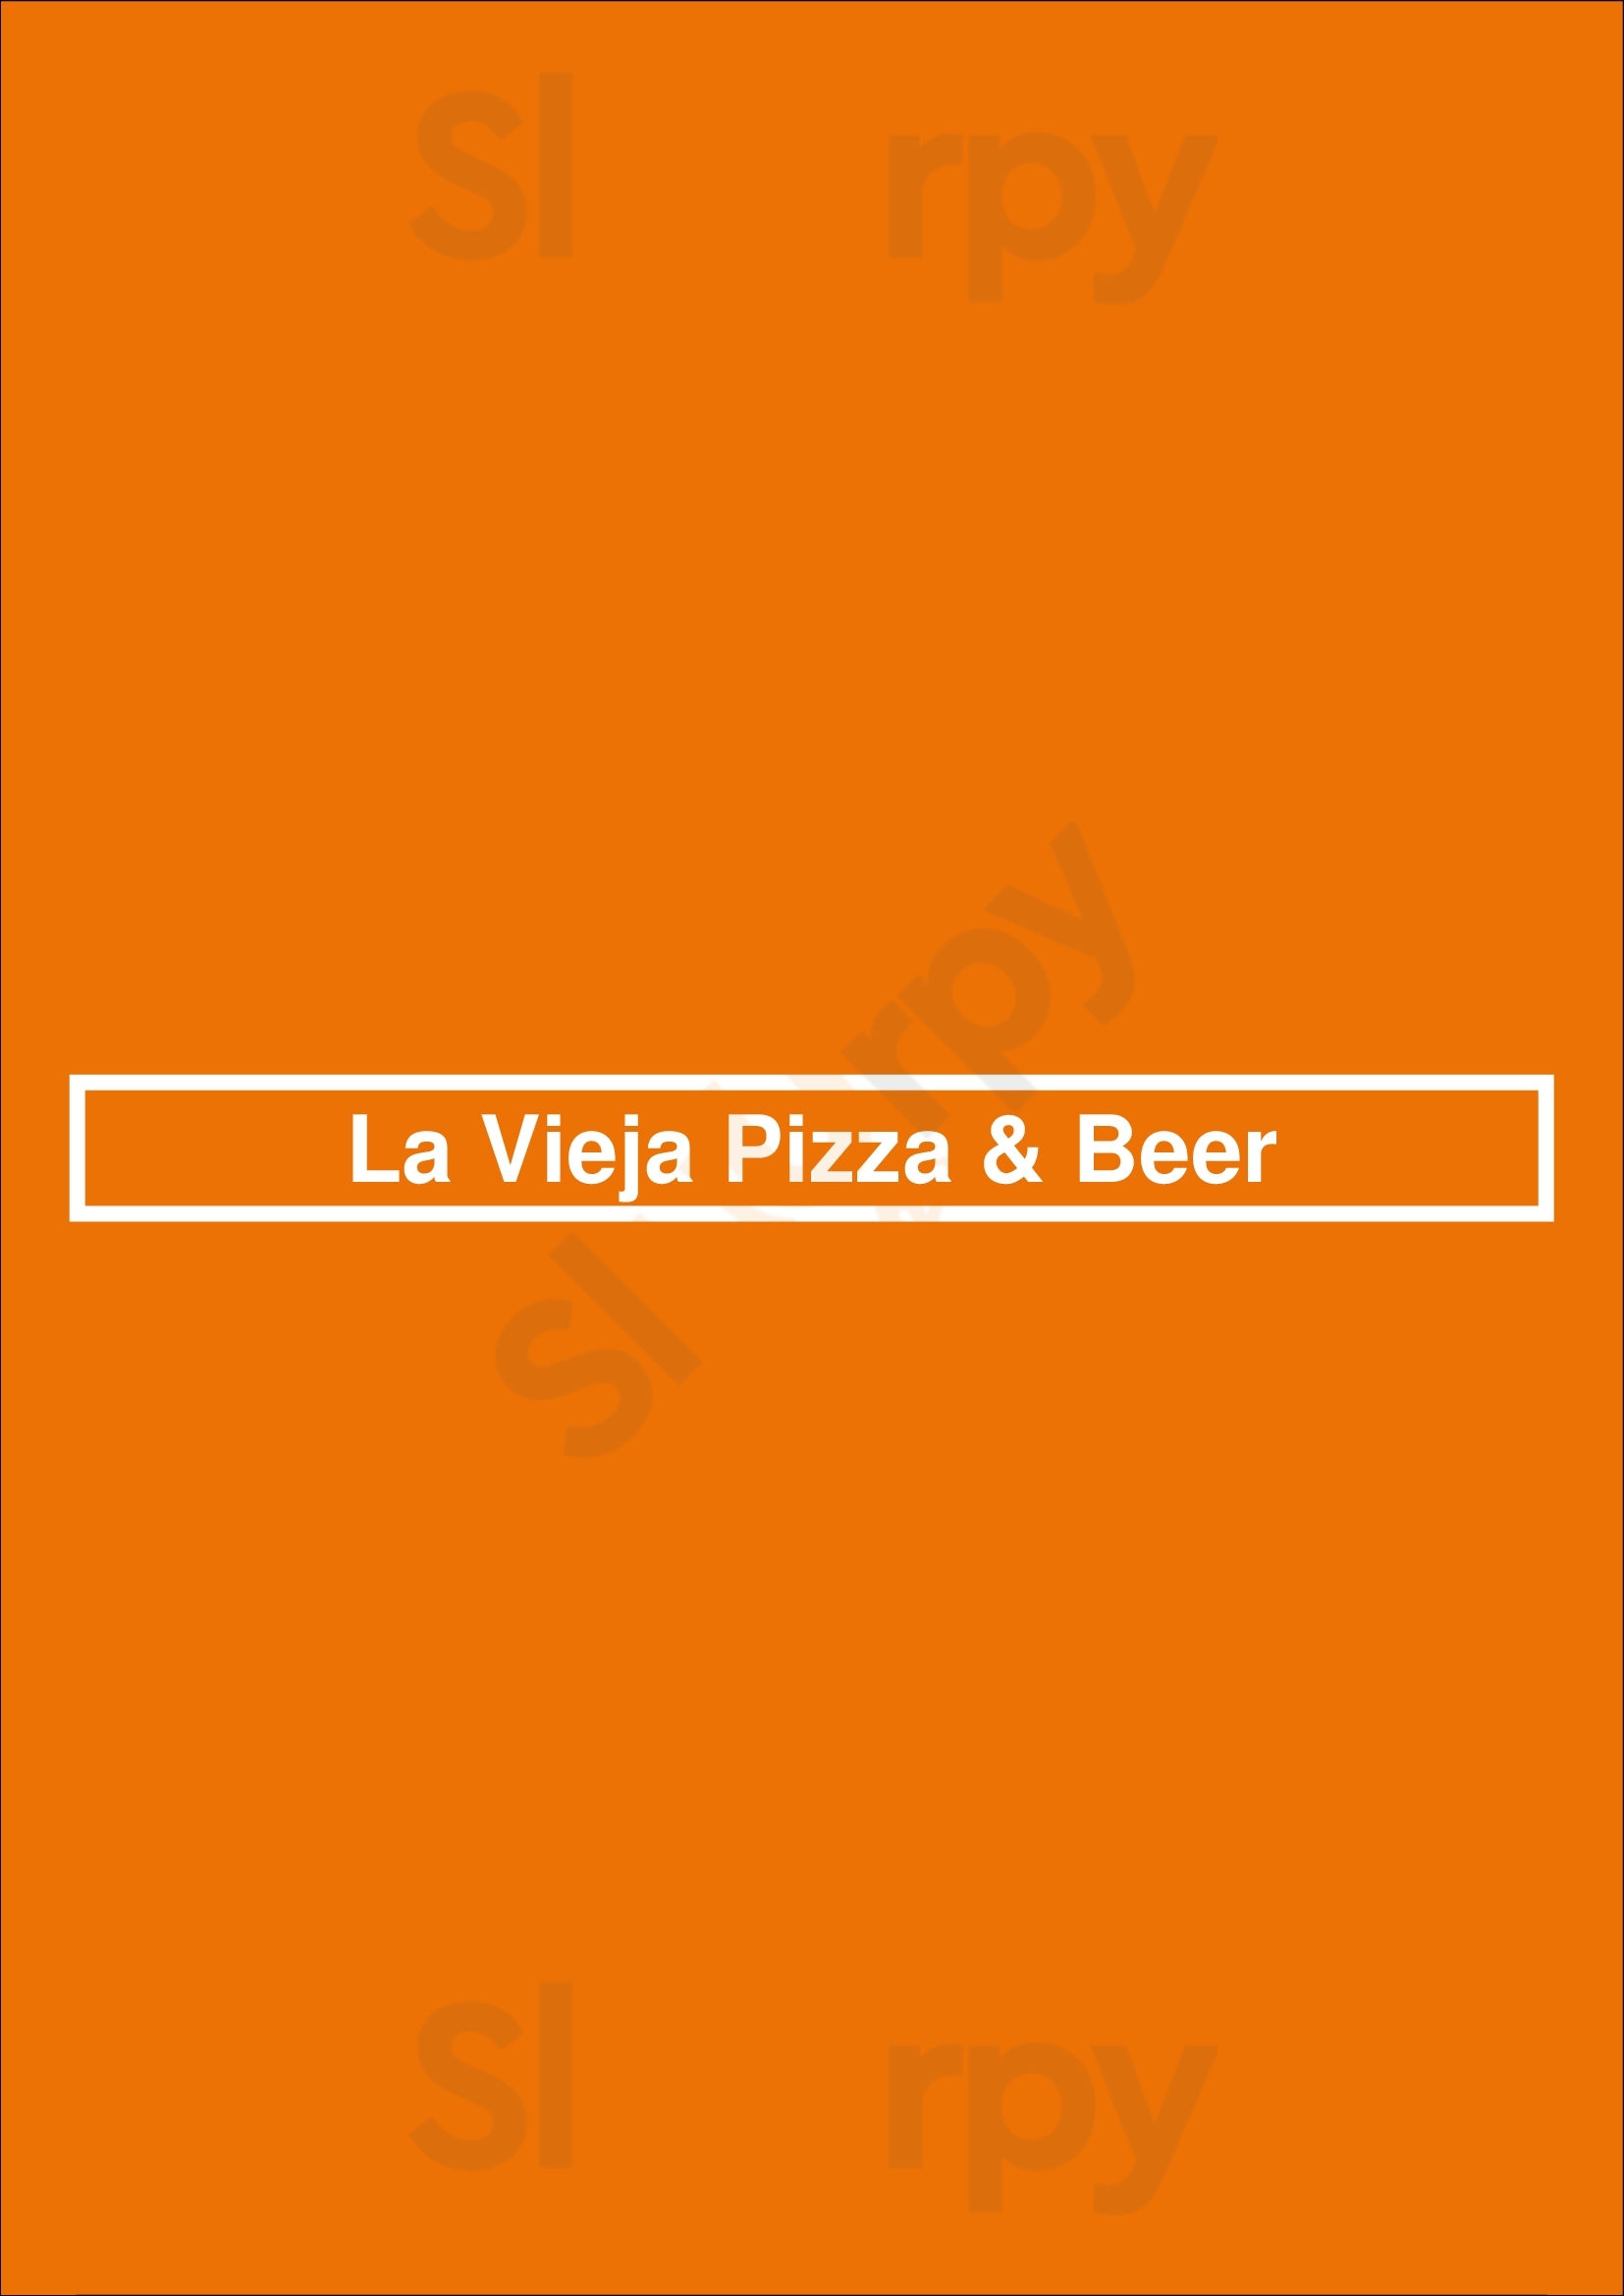 La Vieja Pizza & Beer San Juan Menu - 1